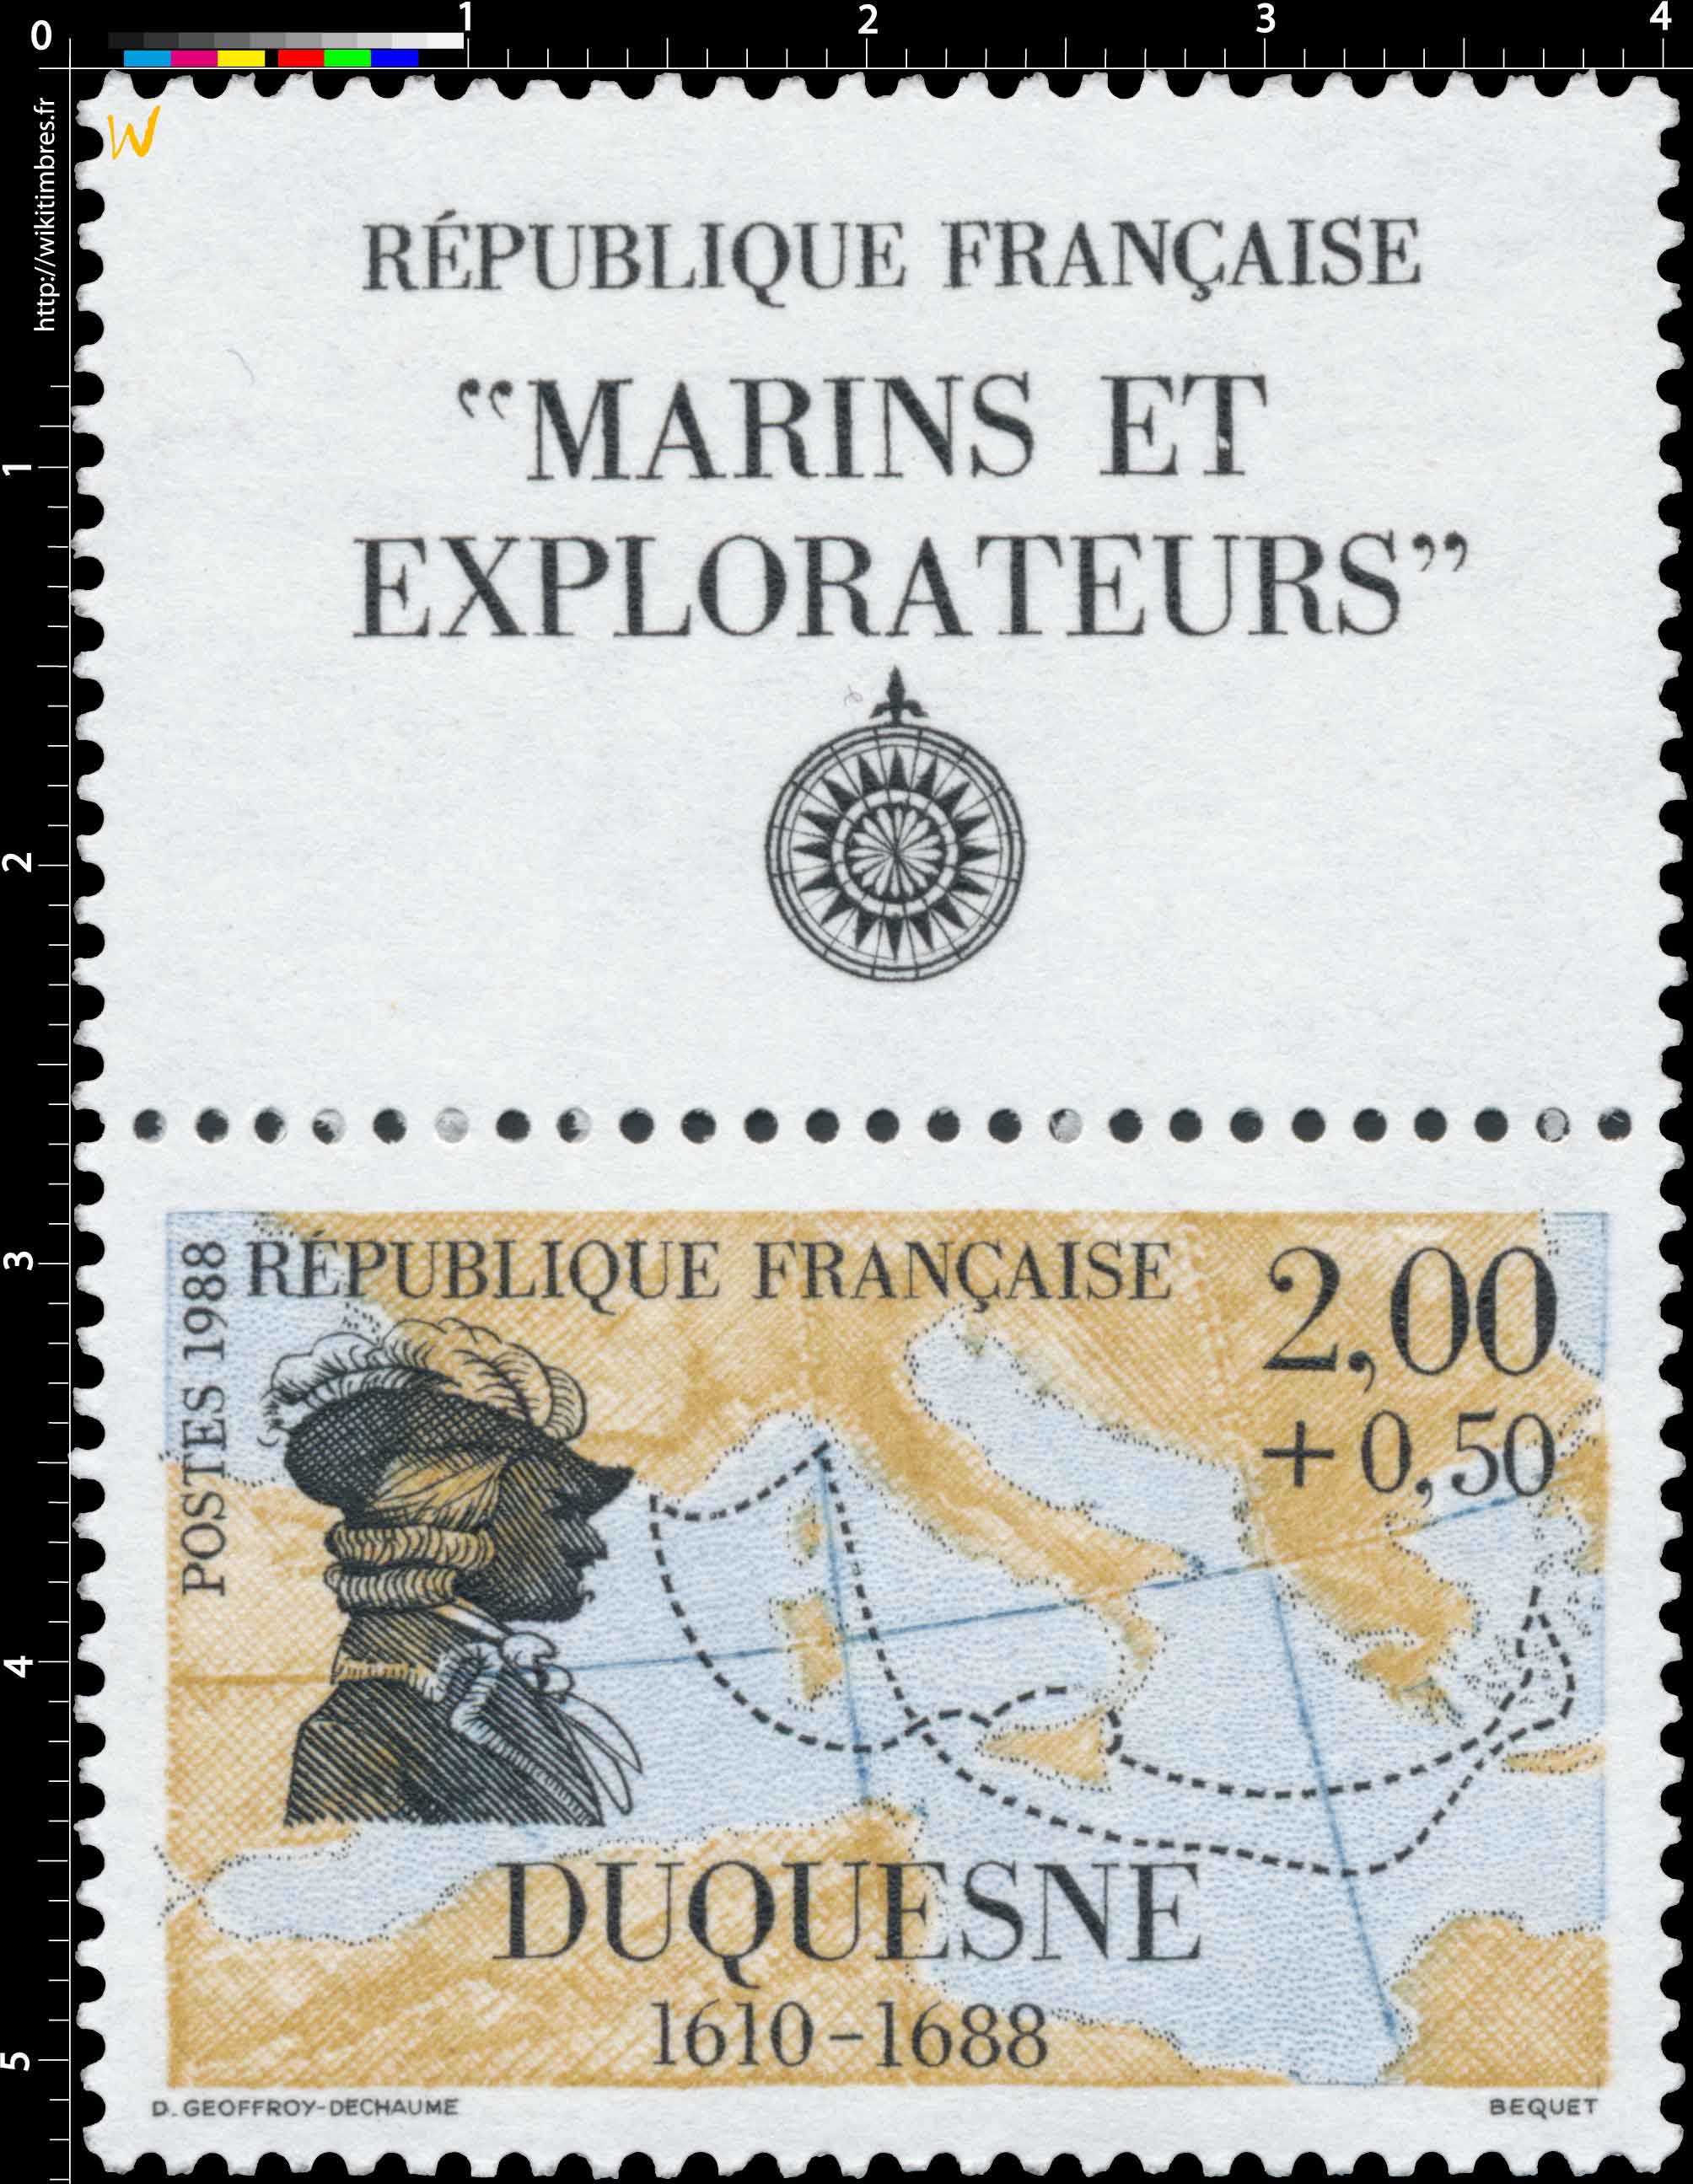 1988 DUQUESNE 1610-1688